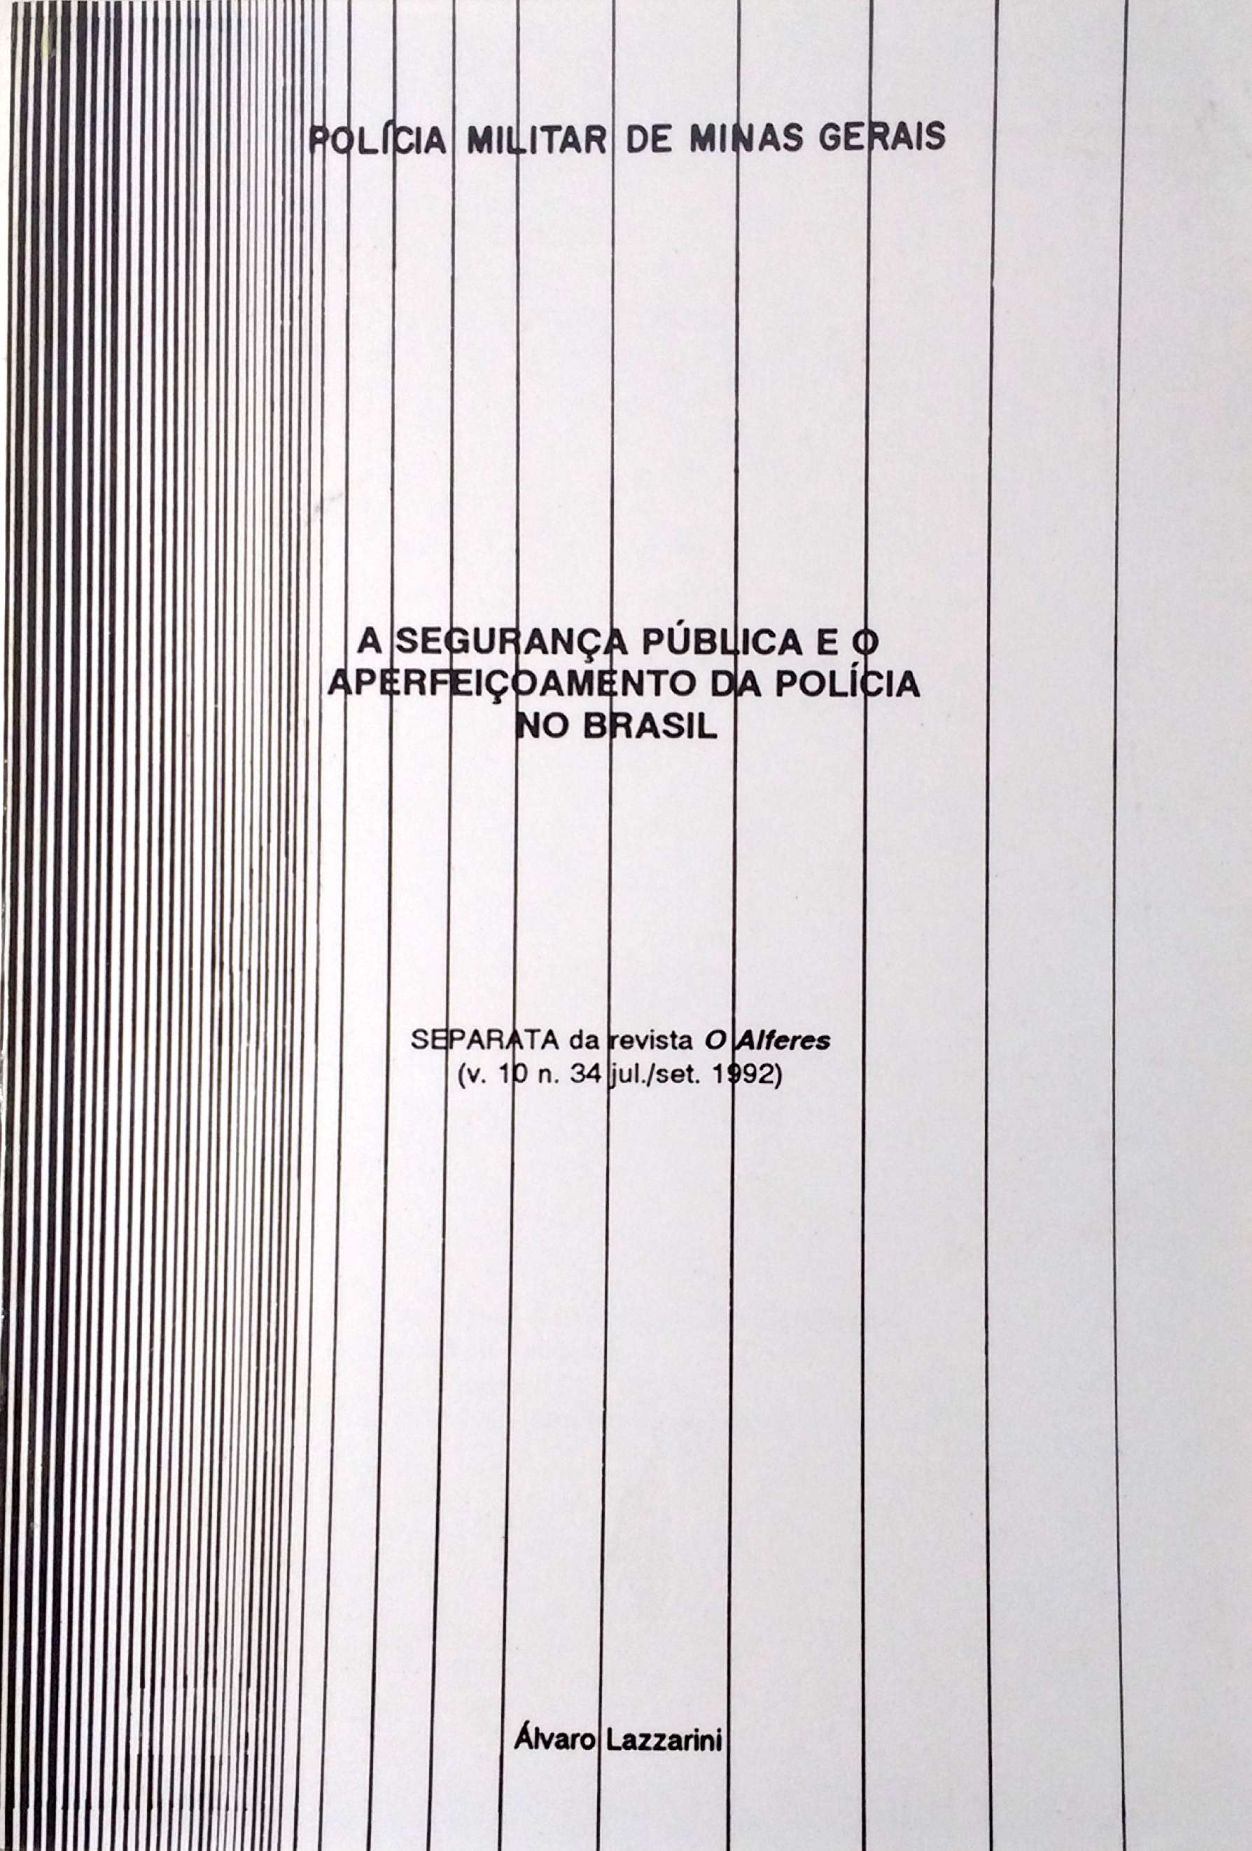 					Visualizar v. 10 n. 34 (1992): SEPARATA, O ALFERES - JULHO/SETEMBRO 1992
				